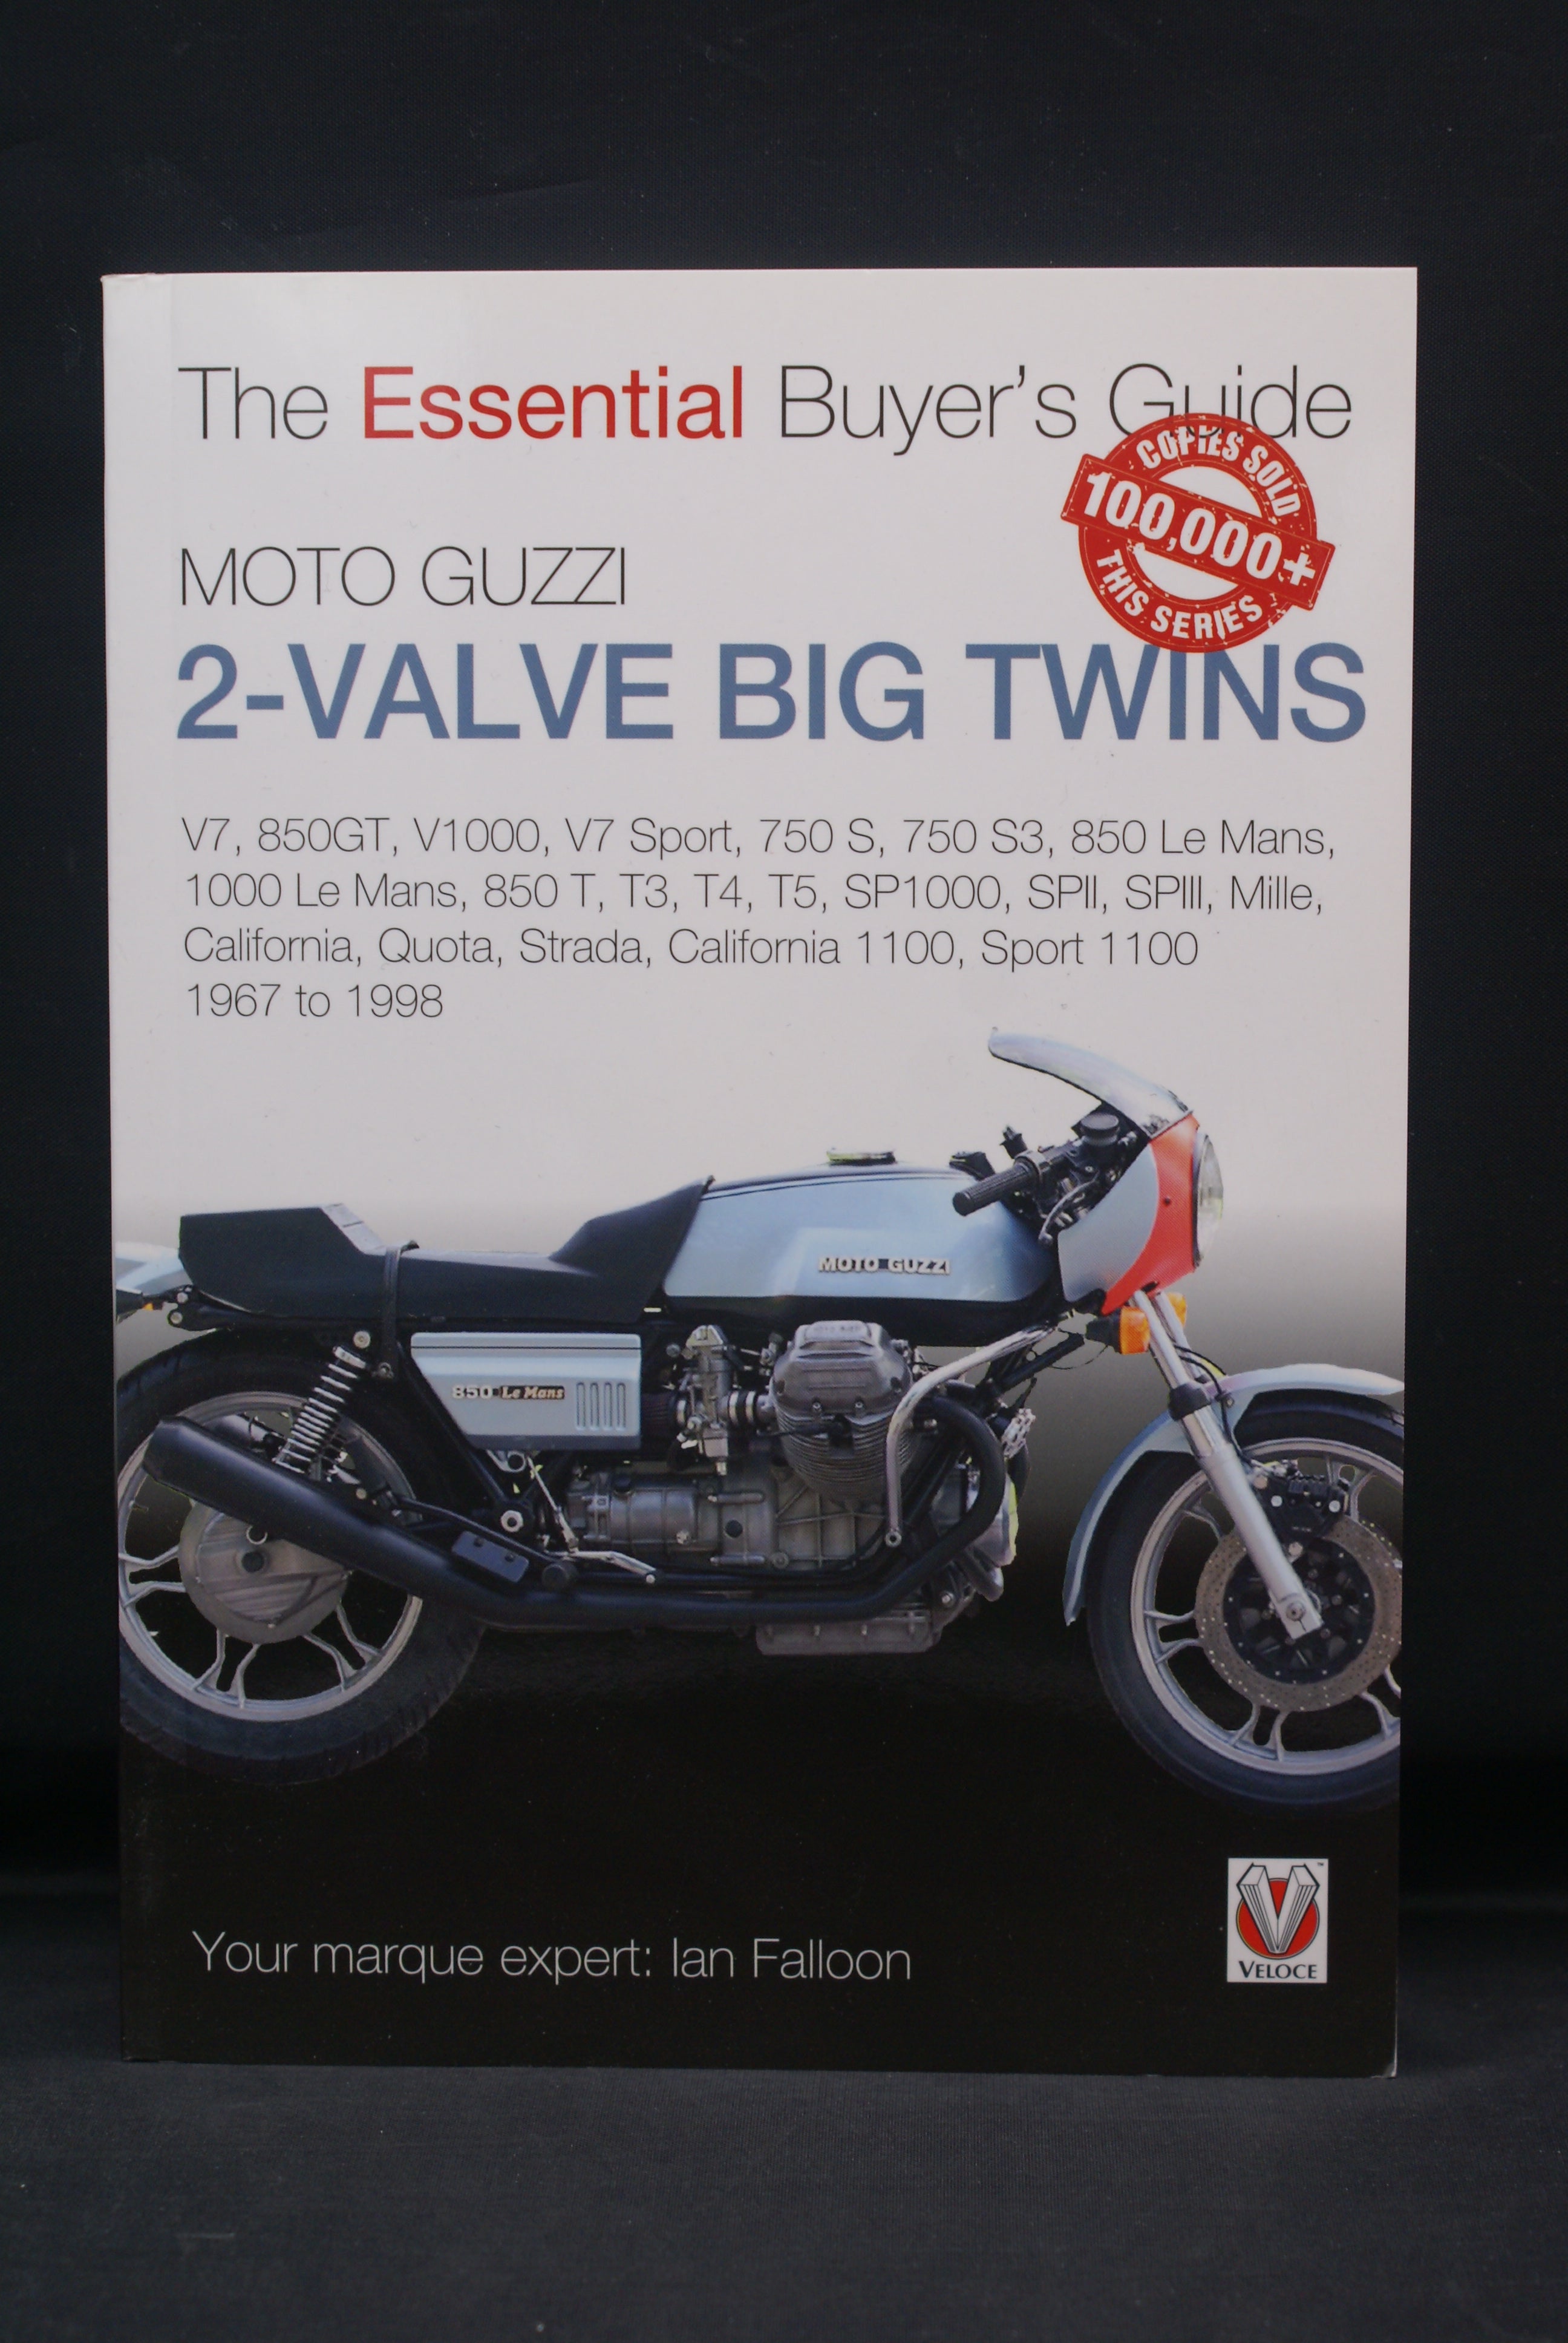 Moto Guzzi, 2-Valve Big Twins